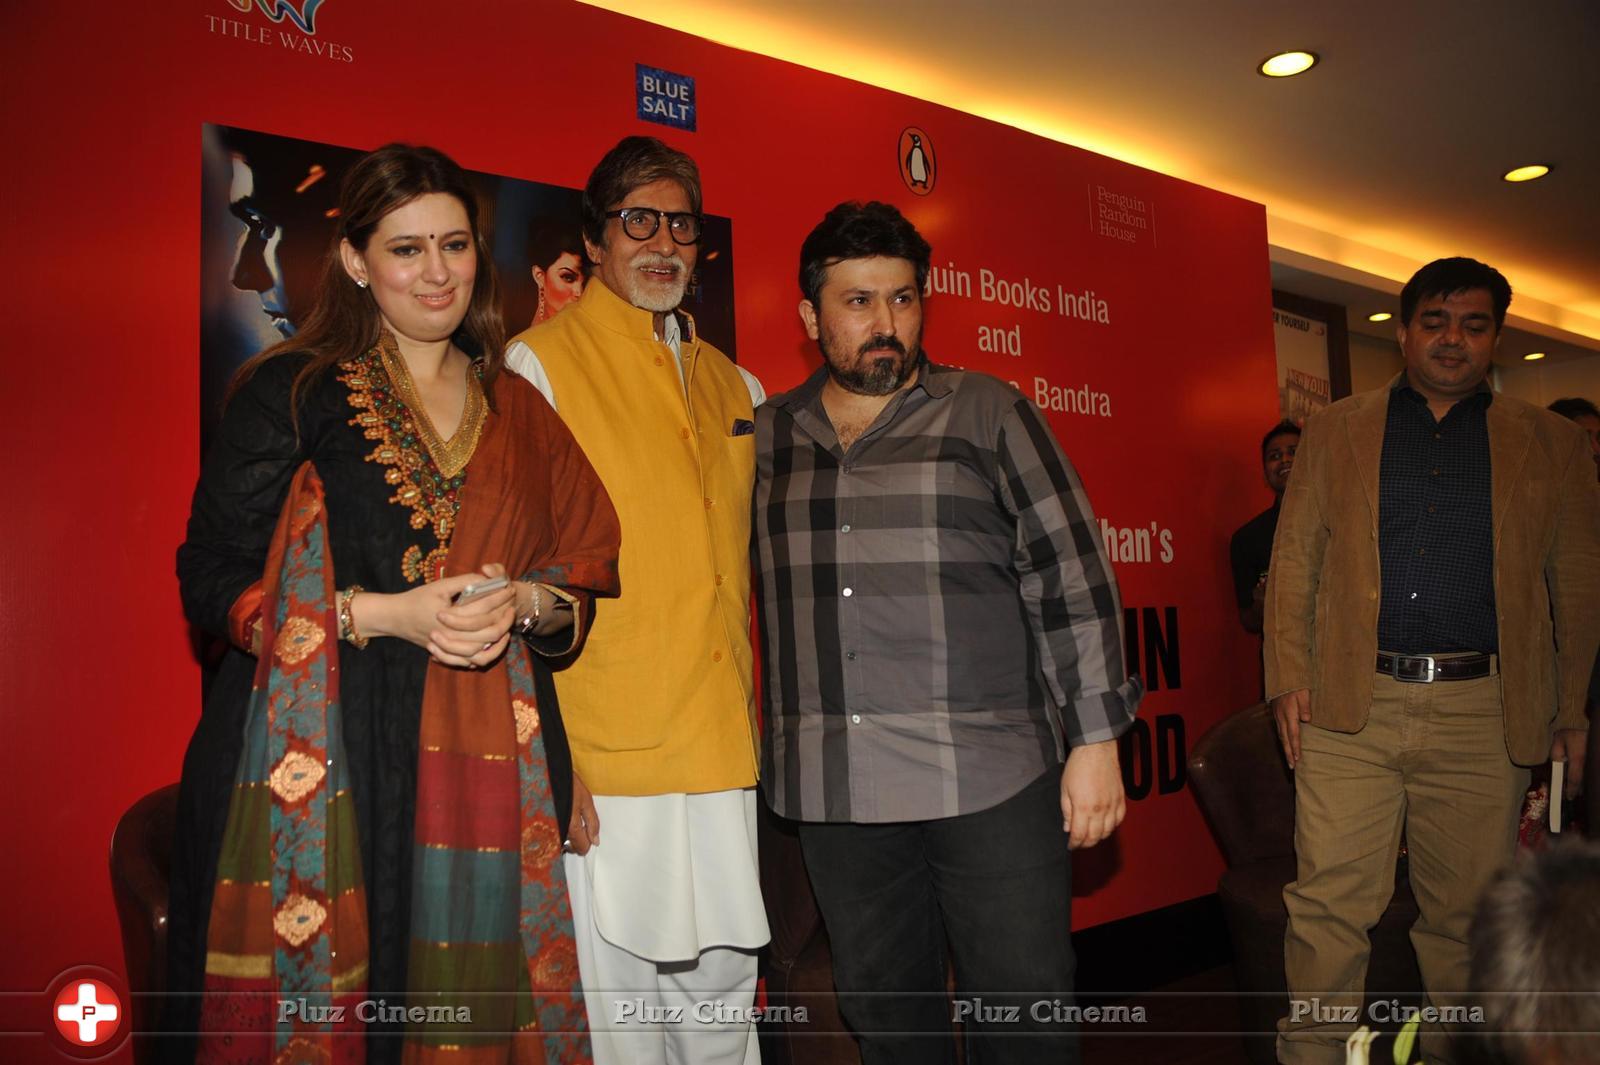 Amitabh Bachchan - Amitabh Bachchan launches Shadab Amjad Khan's book Murder in Bollywood Photos | Picture 1062745